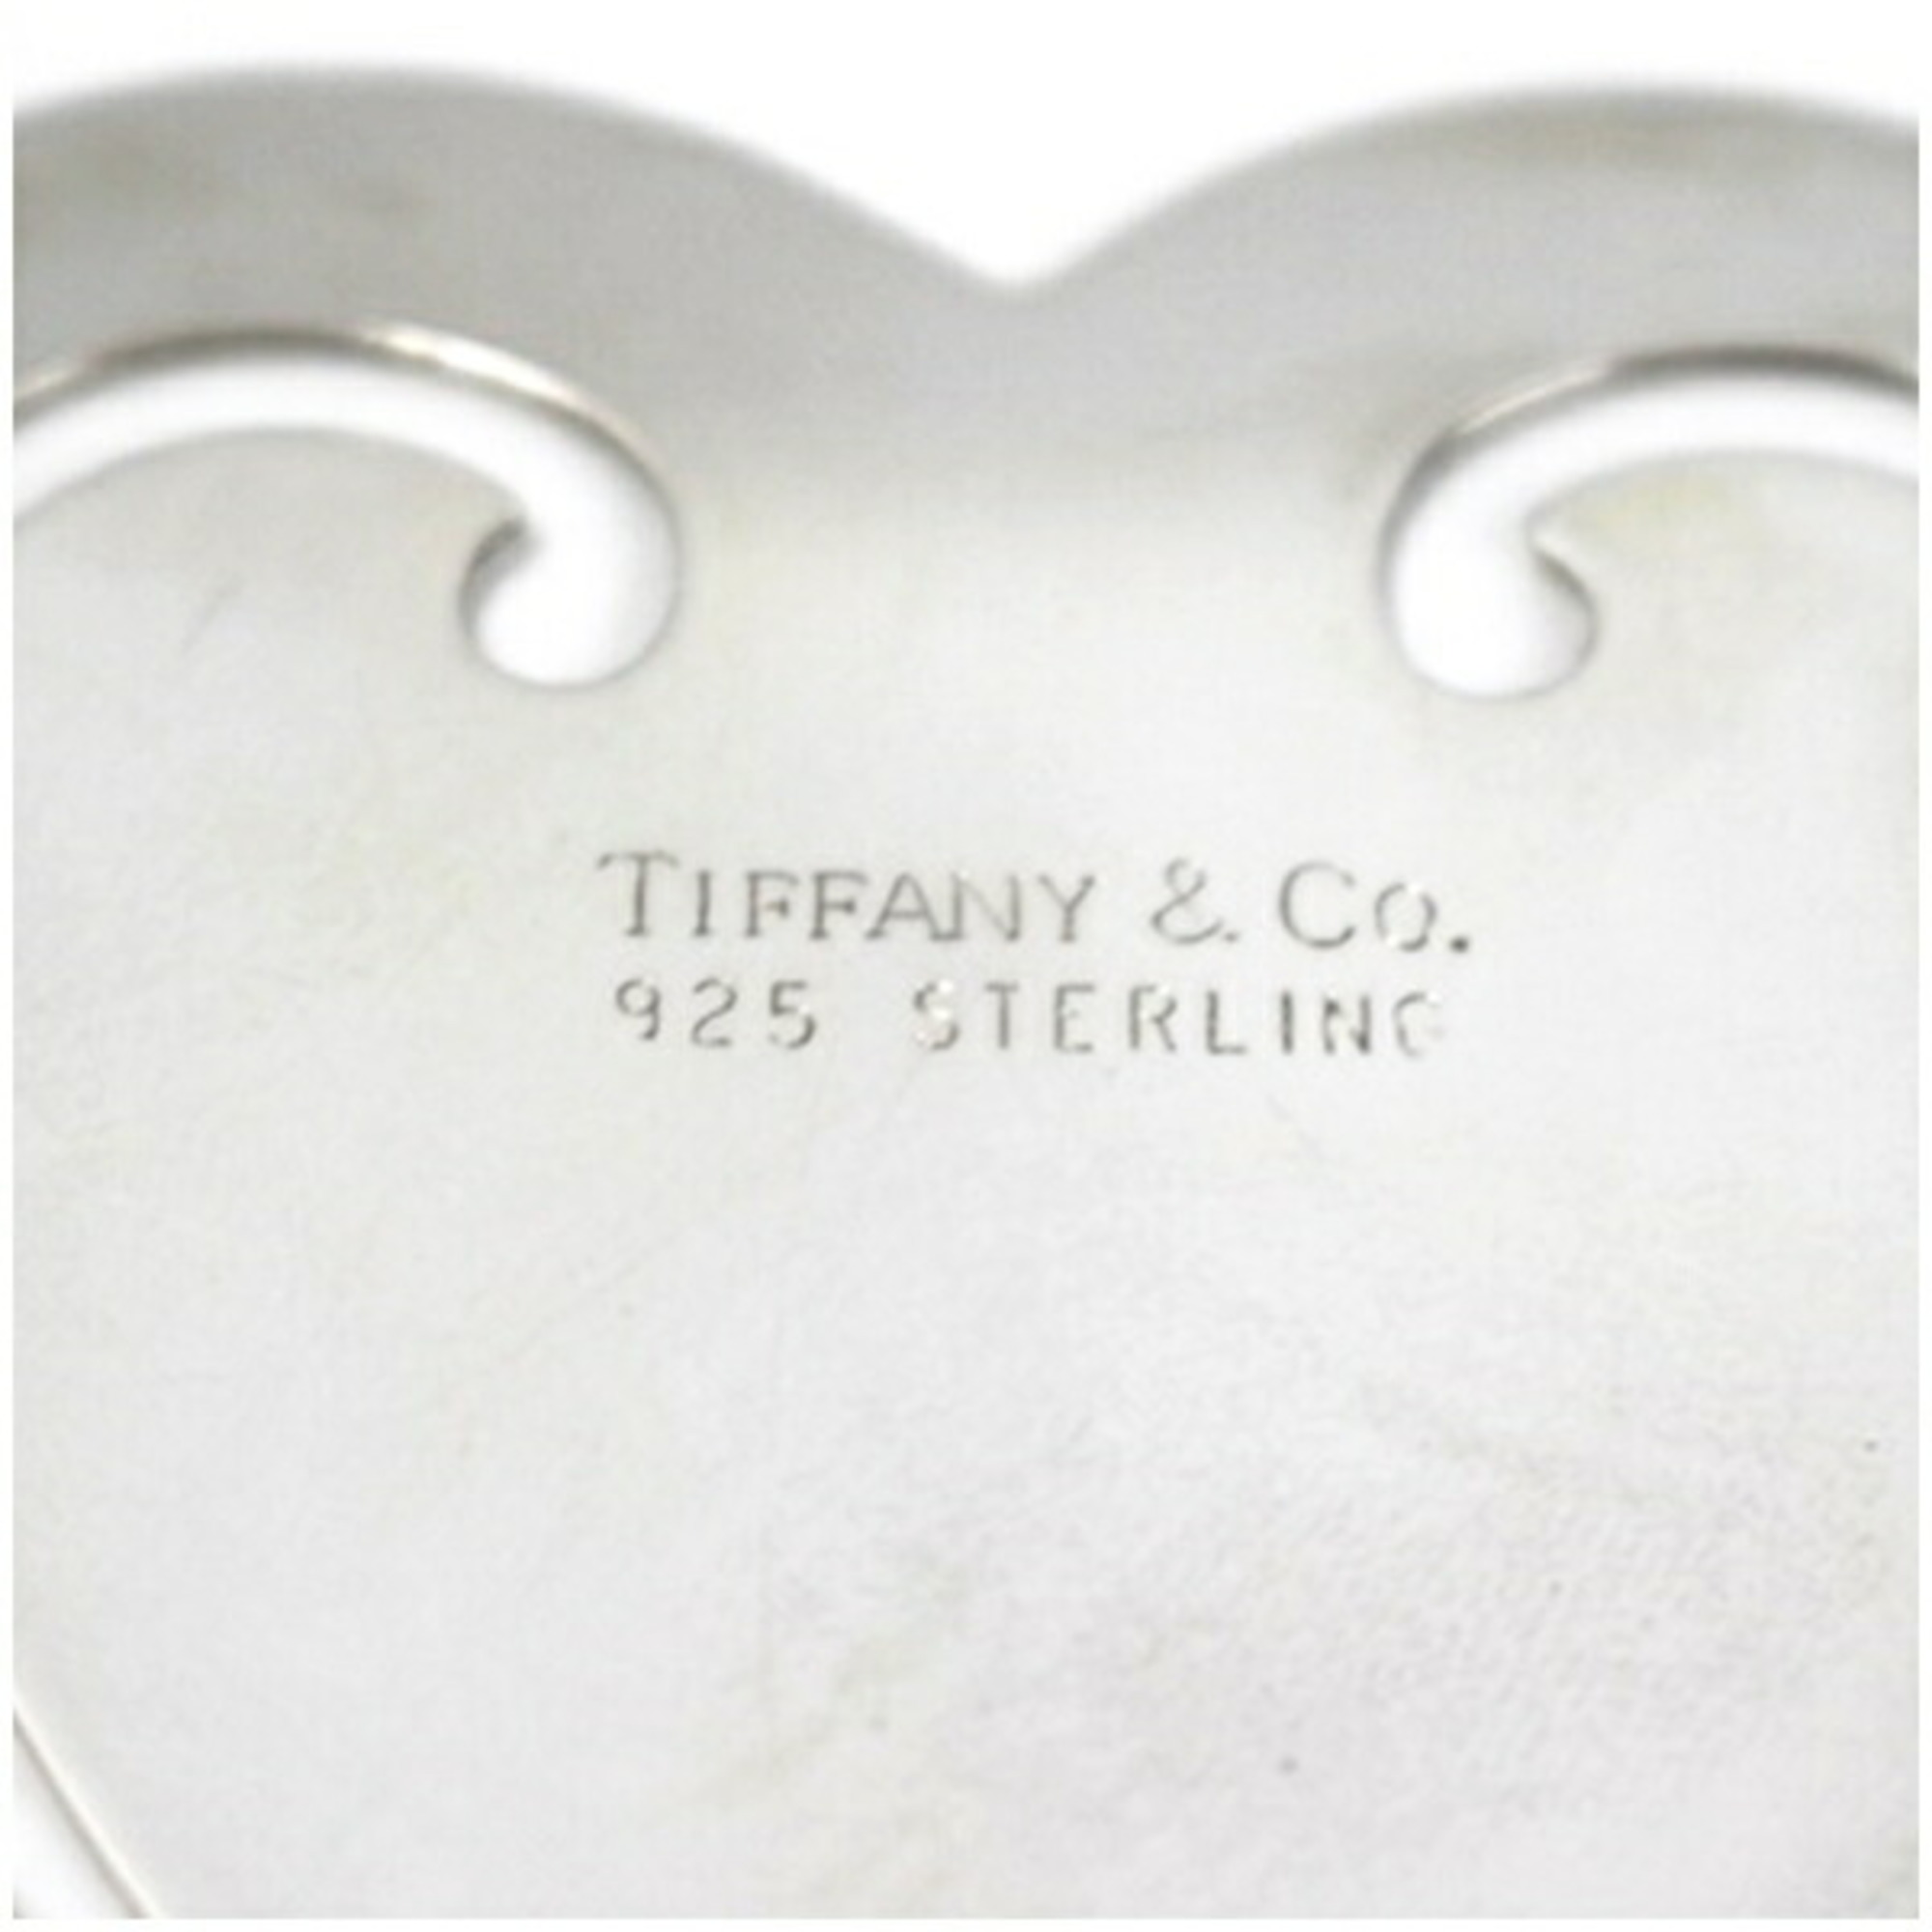 Tiffany Bookmark Heart Silver 925 & Co. Small items Stationery Reading Storage